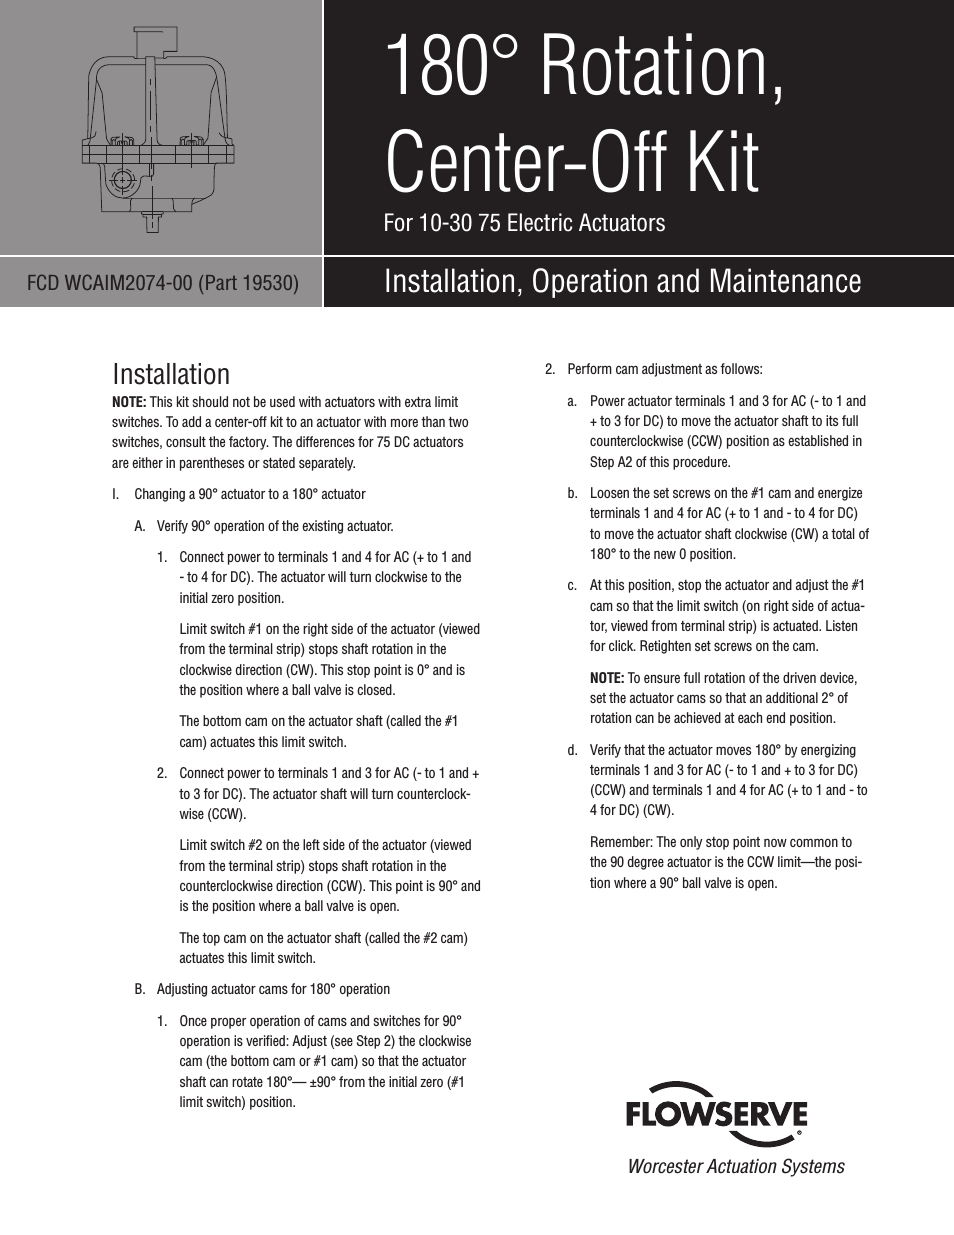 180 Rotation Center-Off Kit